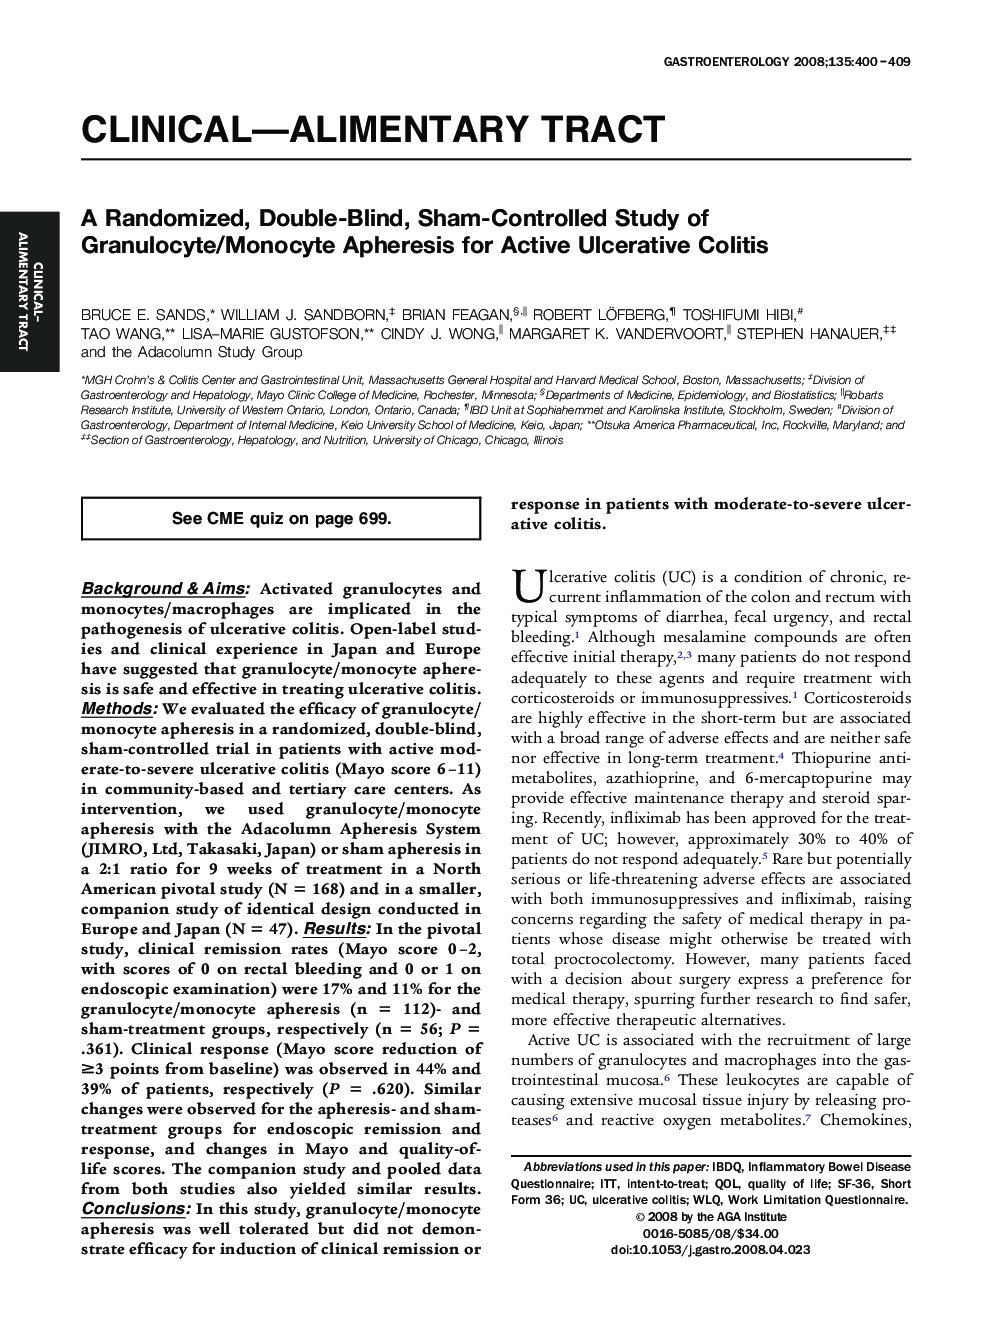 A Randomized, Double-Blind, Sham-Controlled Study of Granulocyte/Monocyte Apheresis for Active Ulcerative Colitis 